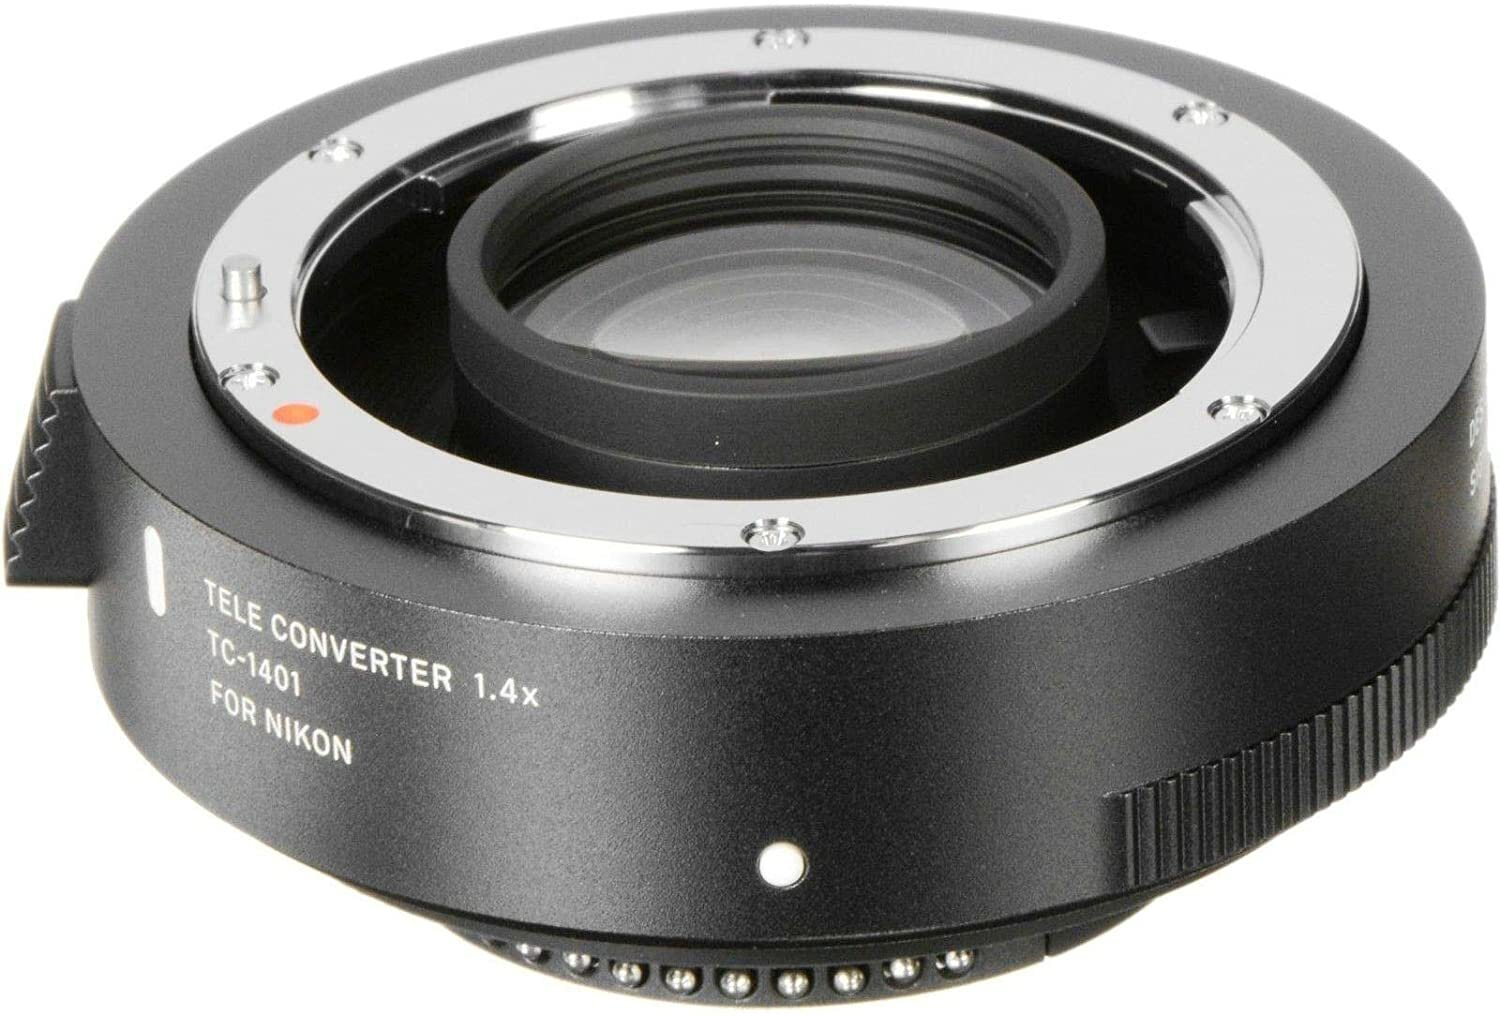 SIGMA TC 1401 1.4X FOR Nikon, teleconverter